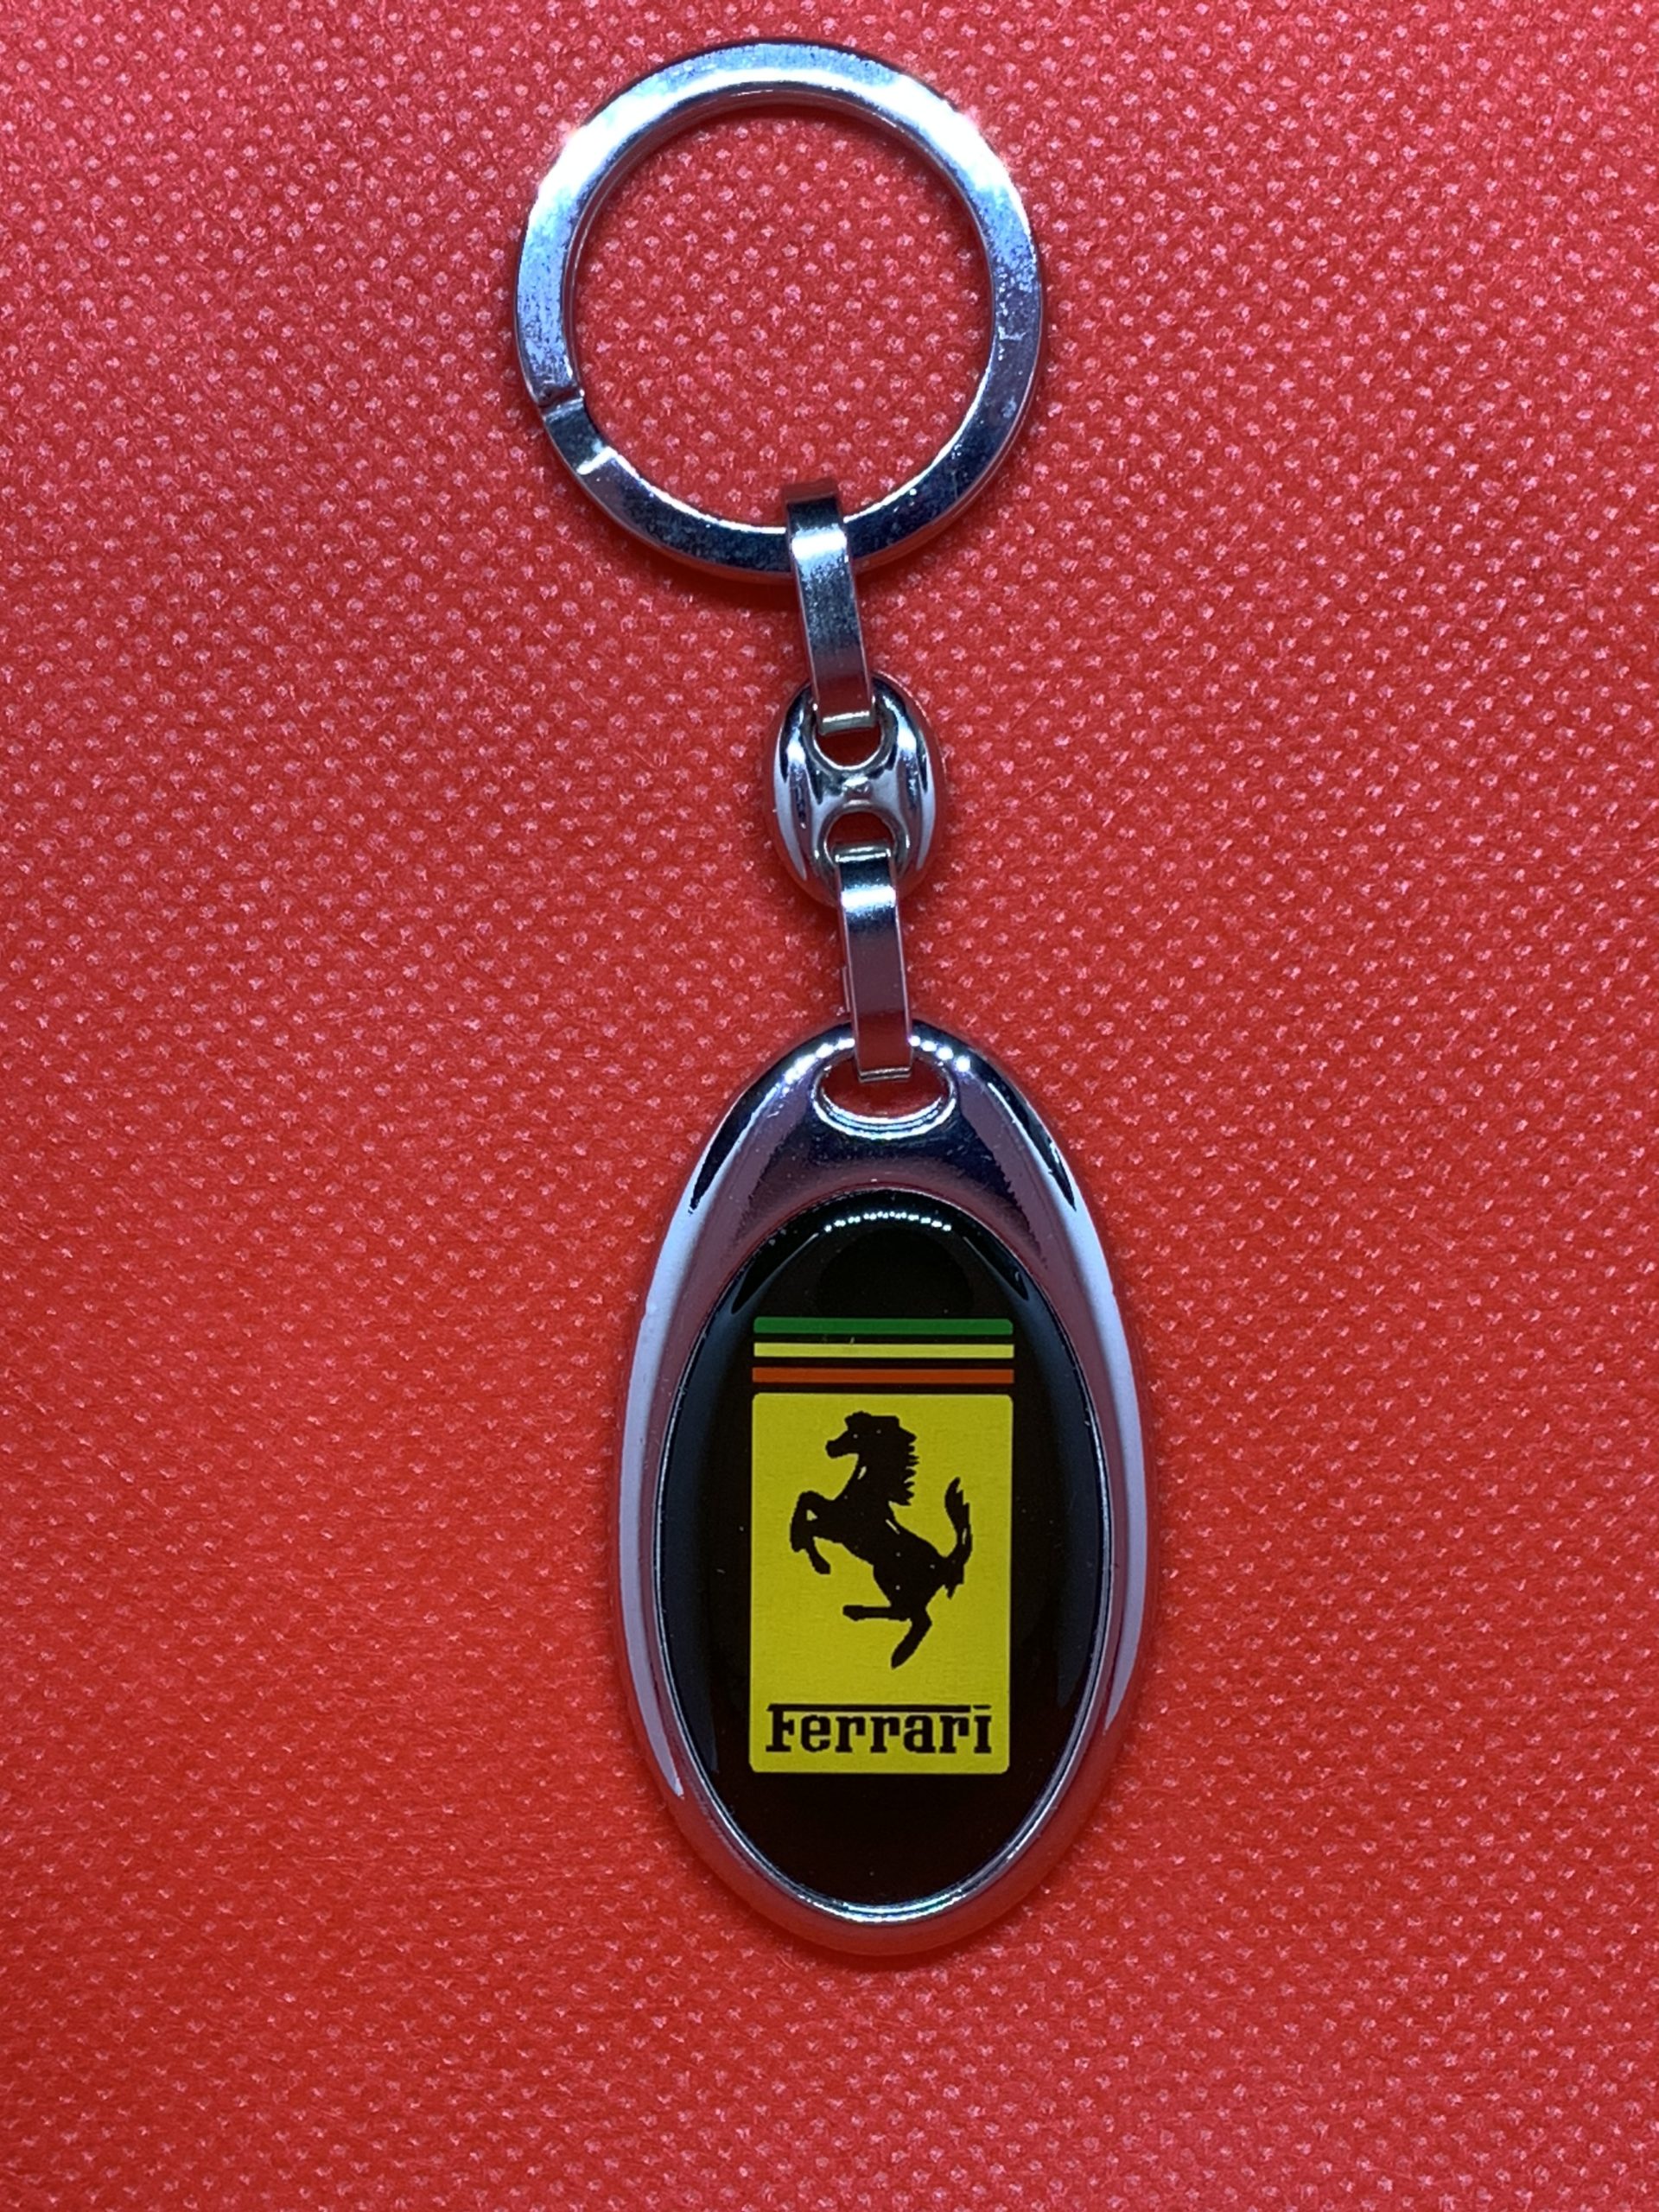 Porte-clefs Ferrari métal chromé